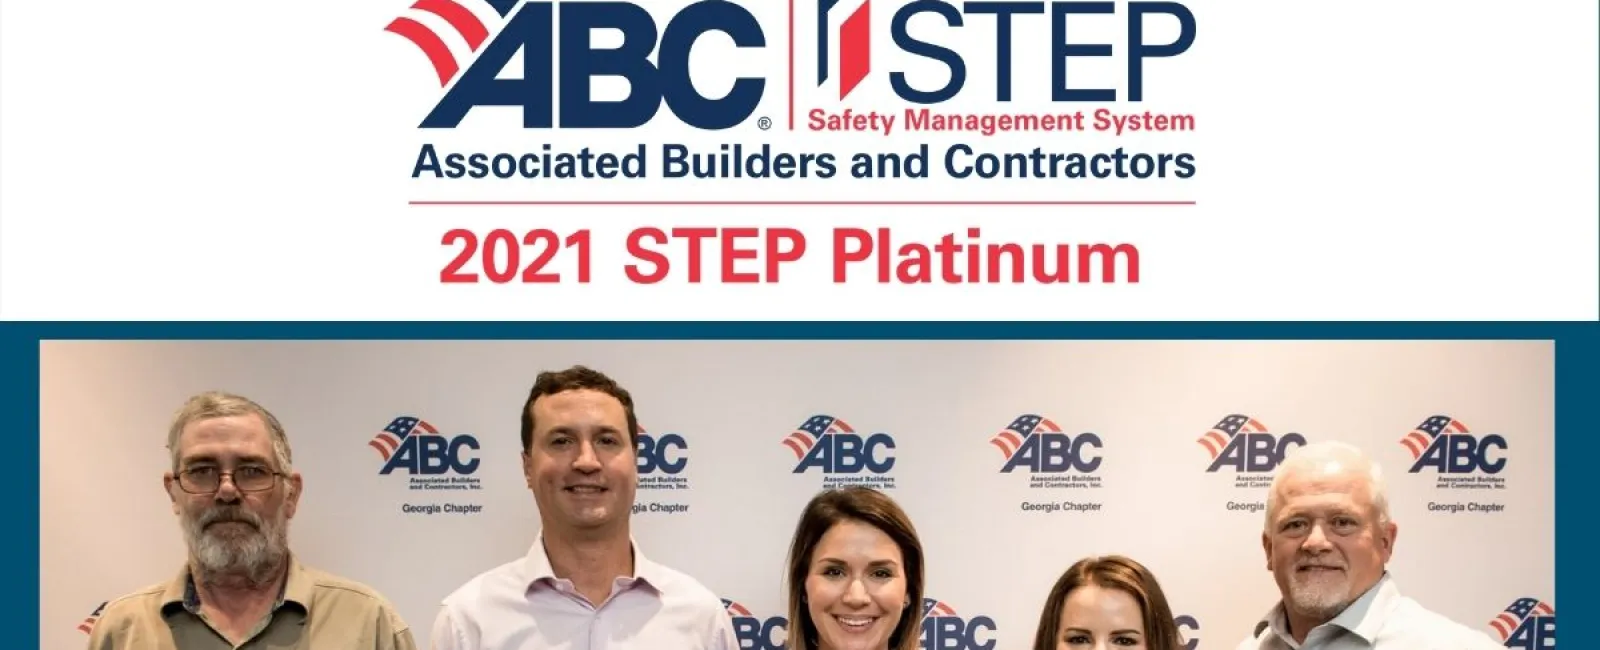 Sluss + Padgett Receives ABC's 2021 Platinum STEP Award for Safety